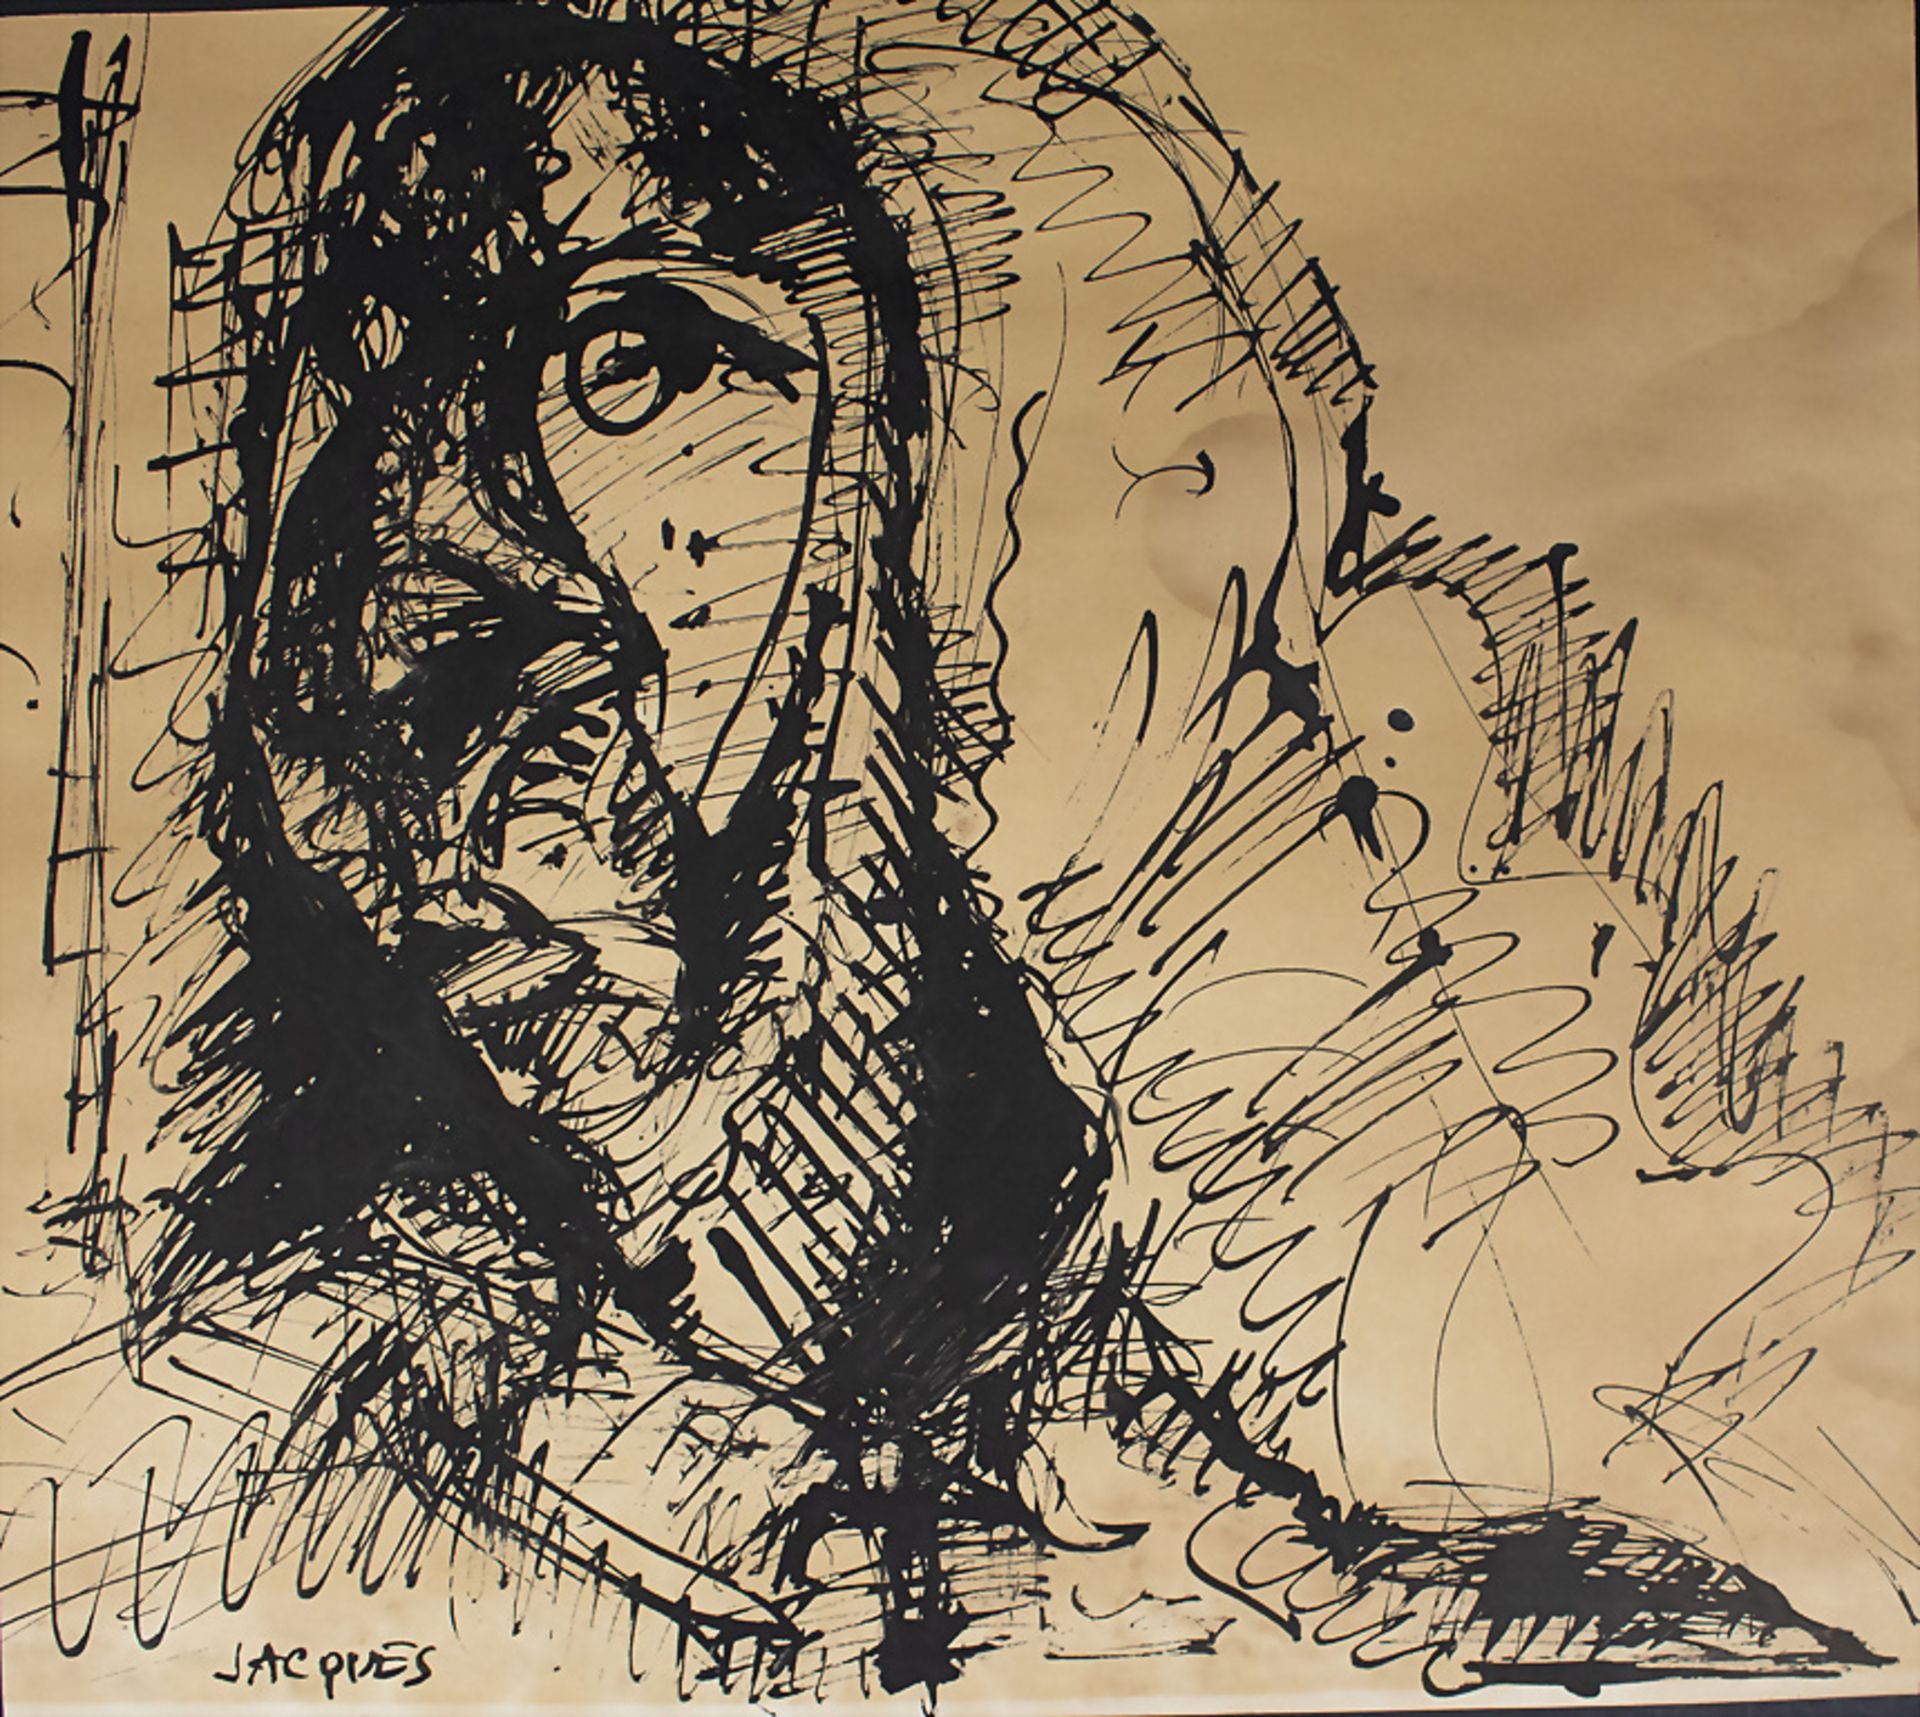 Jaques GRINBERG (1941-2011), 'Porträtkopf' / 'A portrait head'